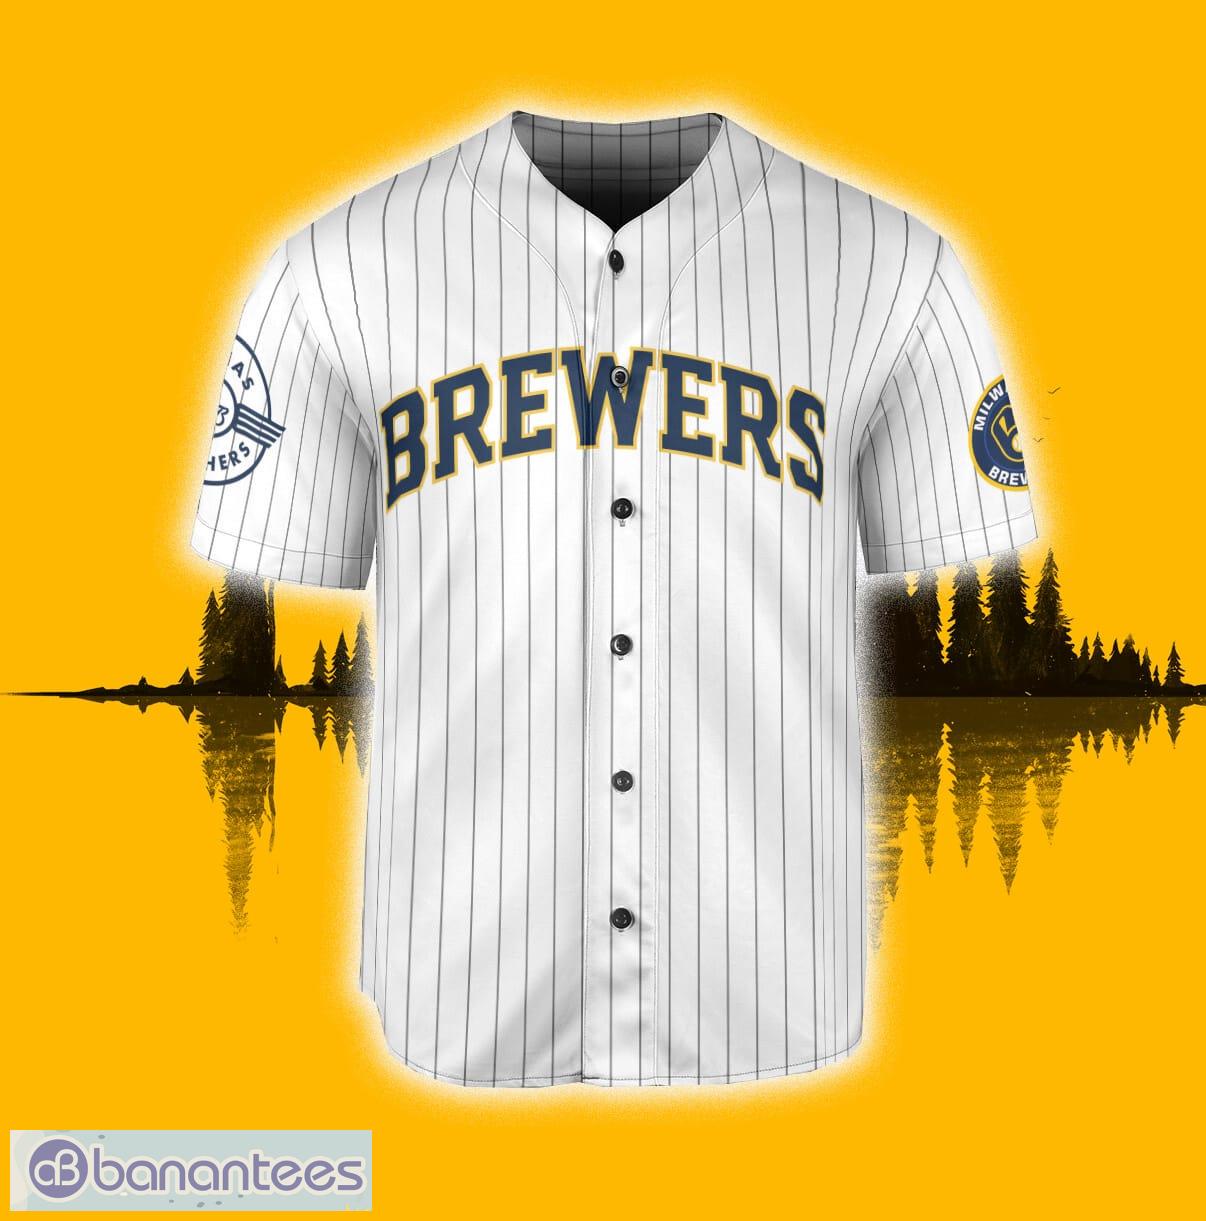 Milwaukee Brewers N. Jonas Baseball Jersey Shirt White Custom Number And  Name - Banantees